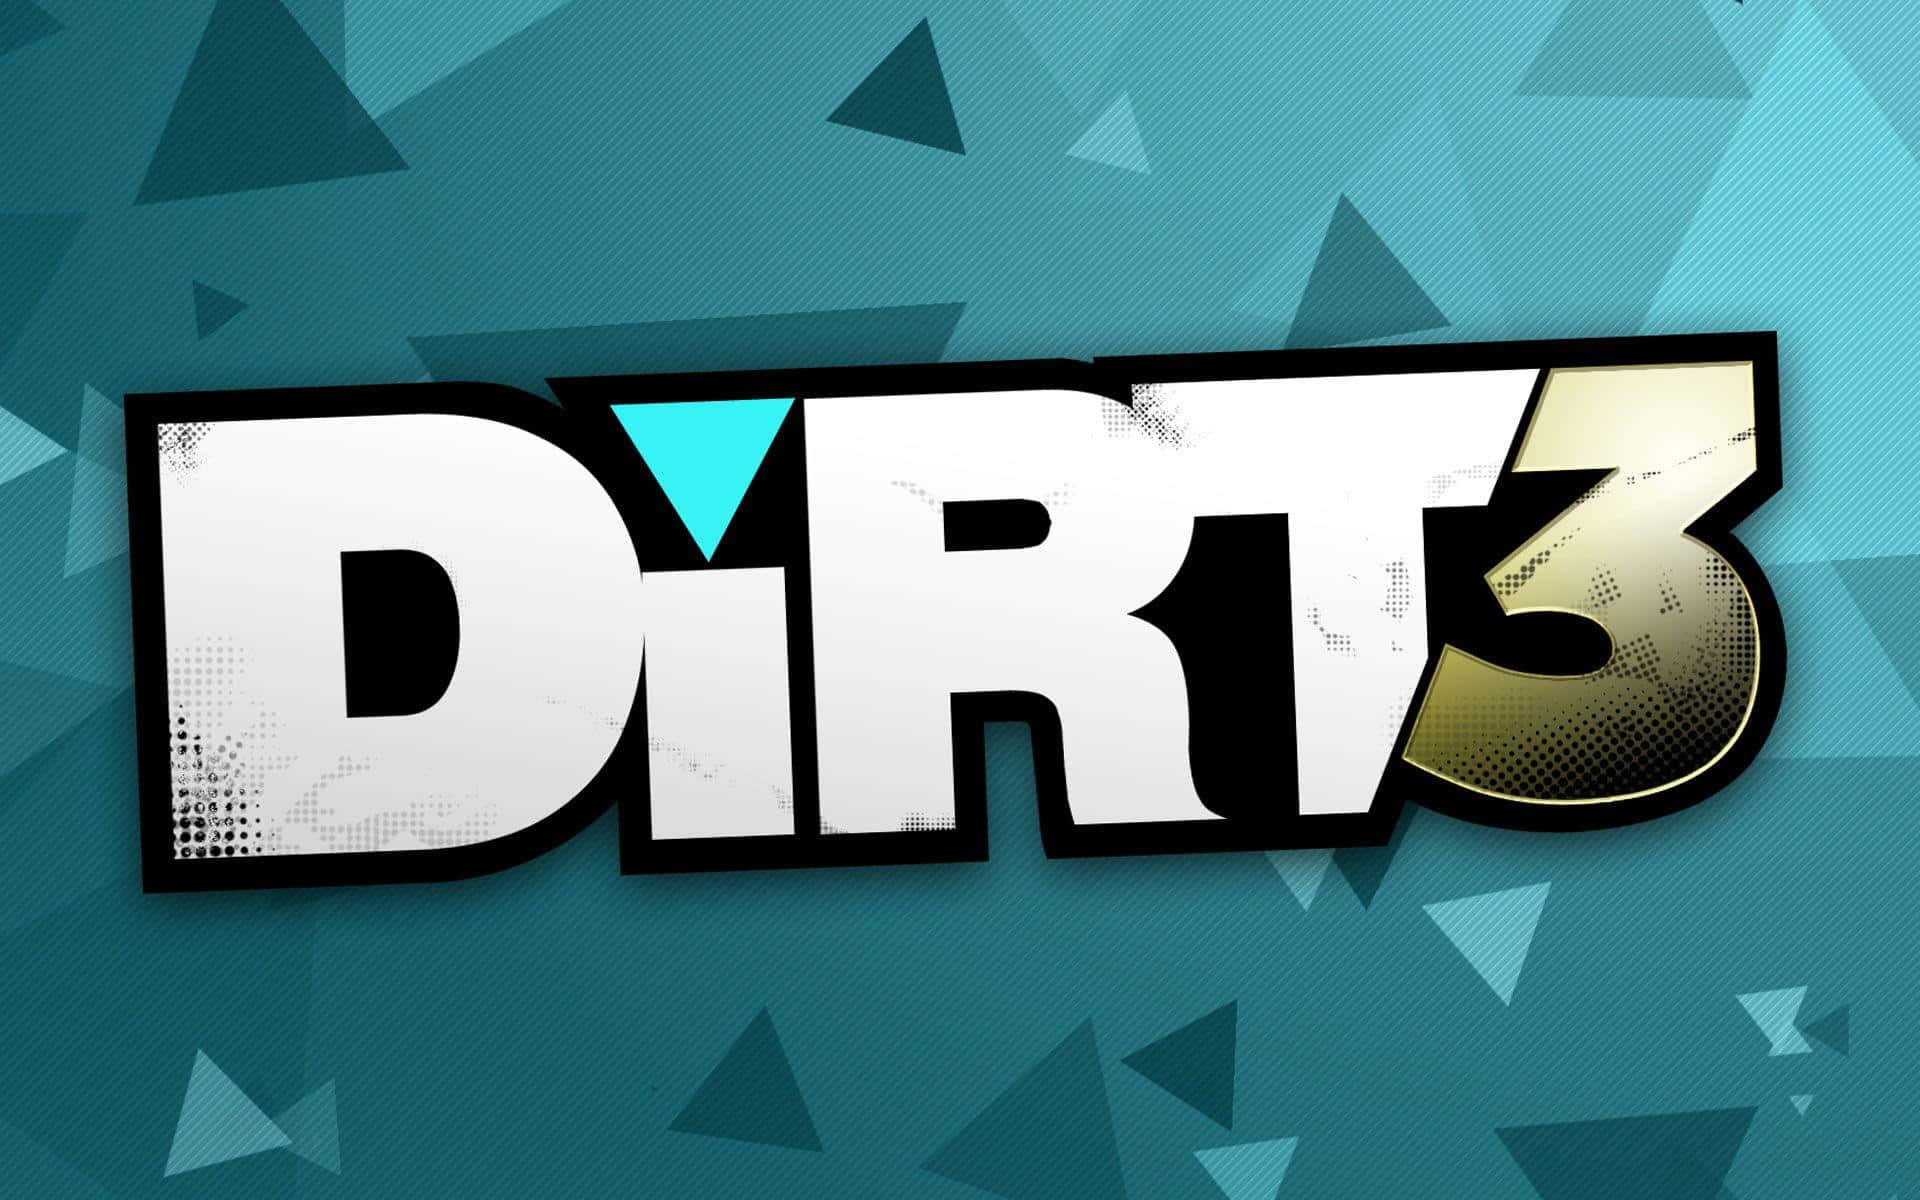 Dirt3-logo På En Blå Baggrund